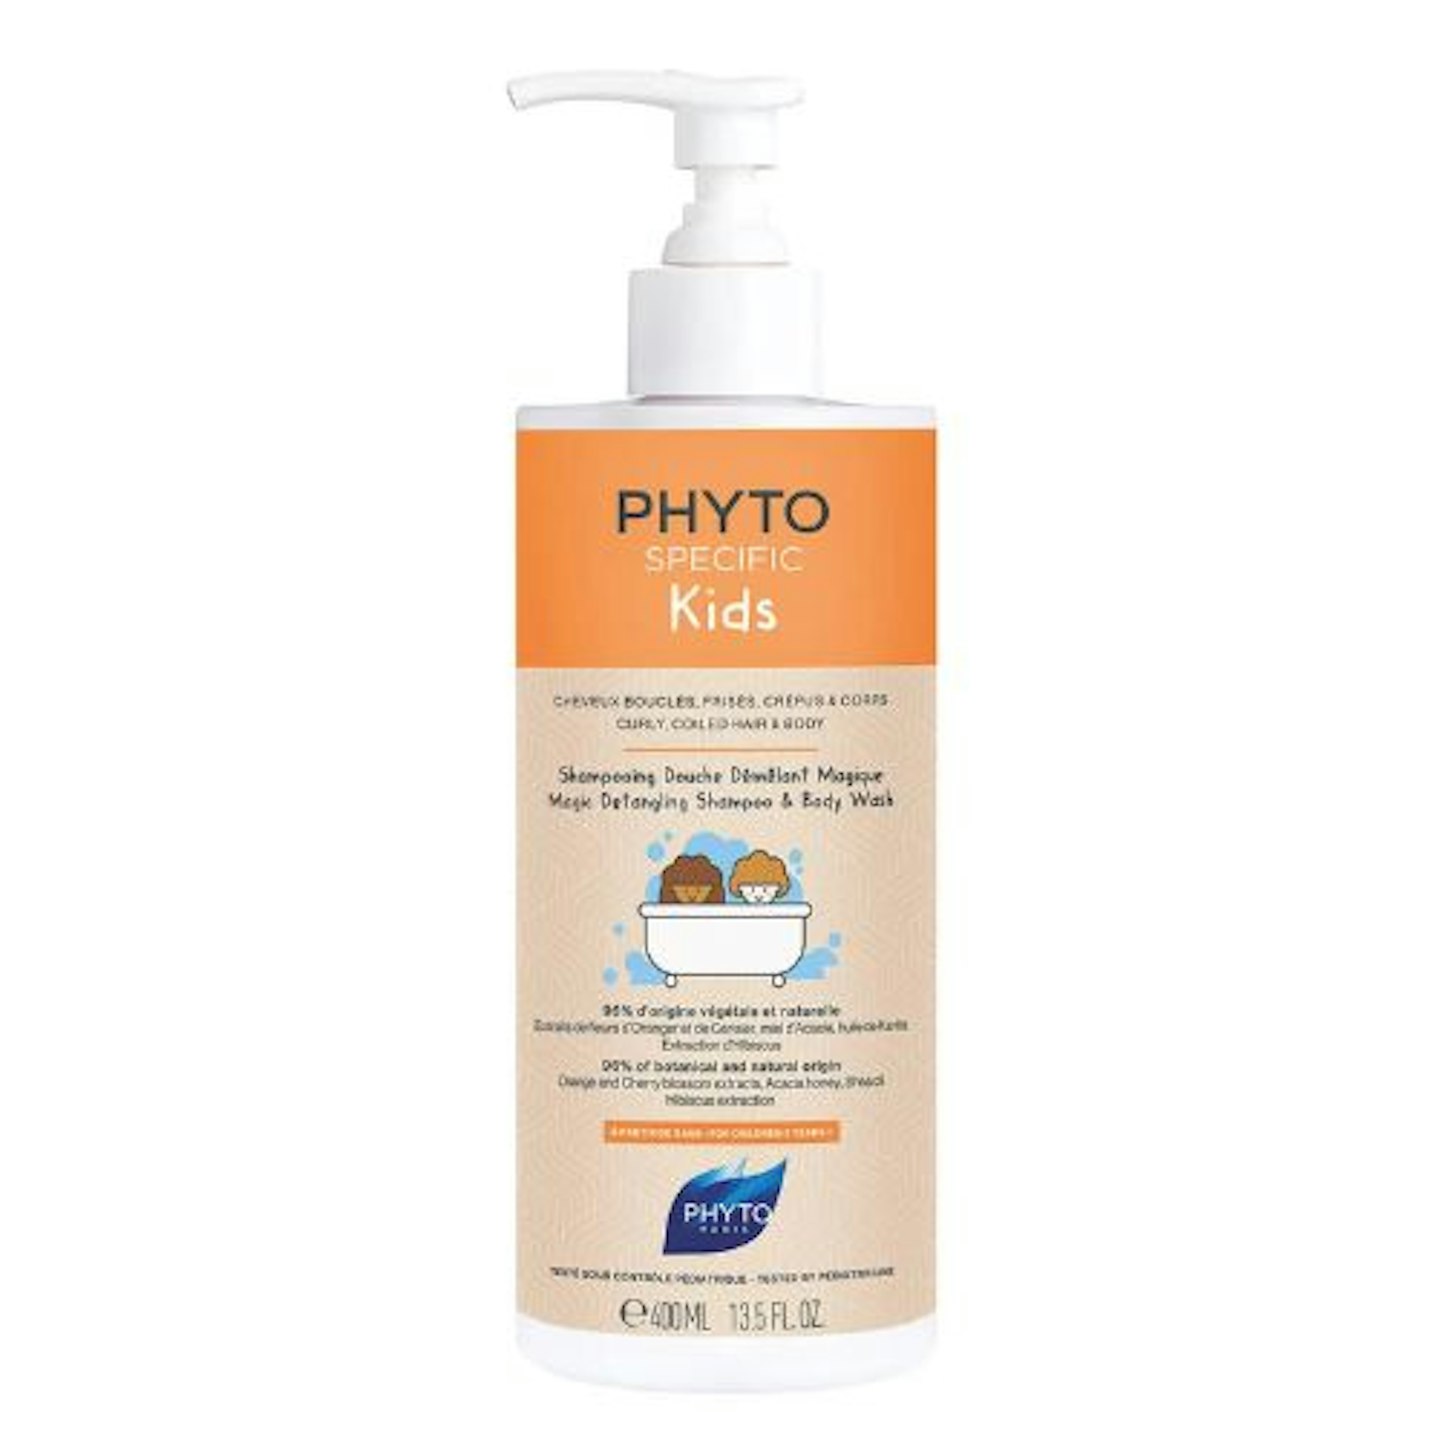 Phyto PhytoKids Magic Detangling Shampoo and Body Wash 